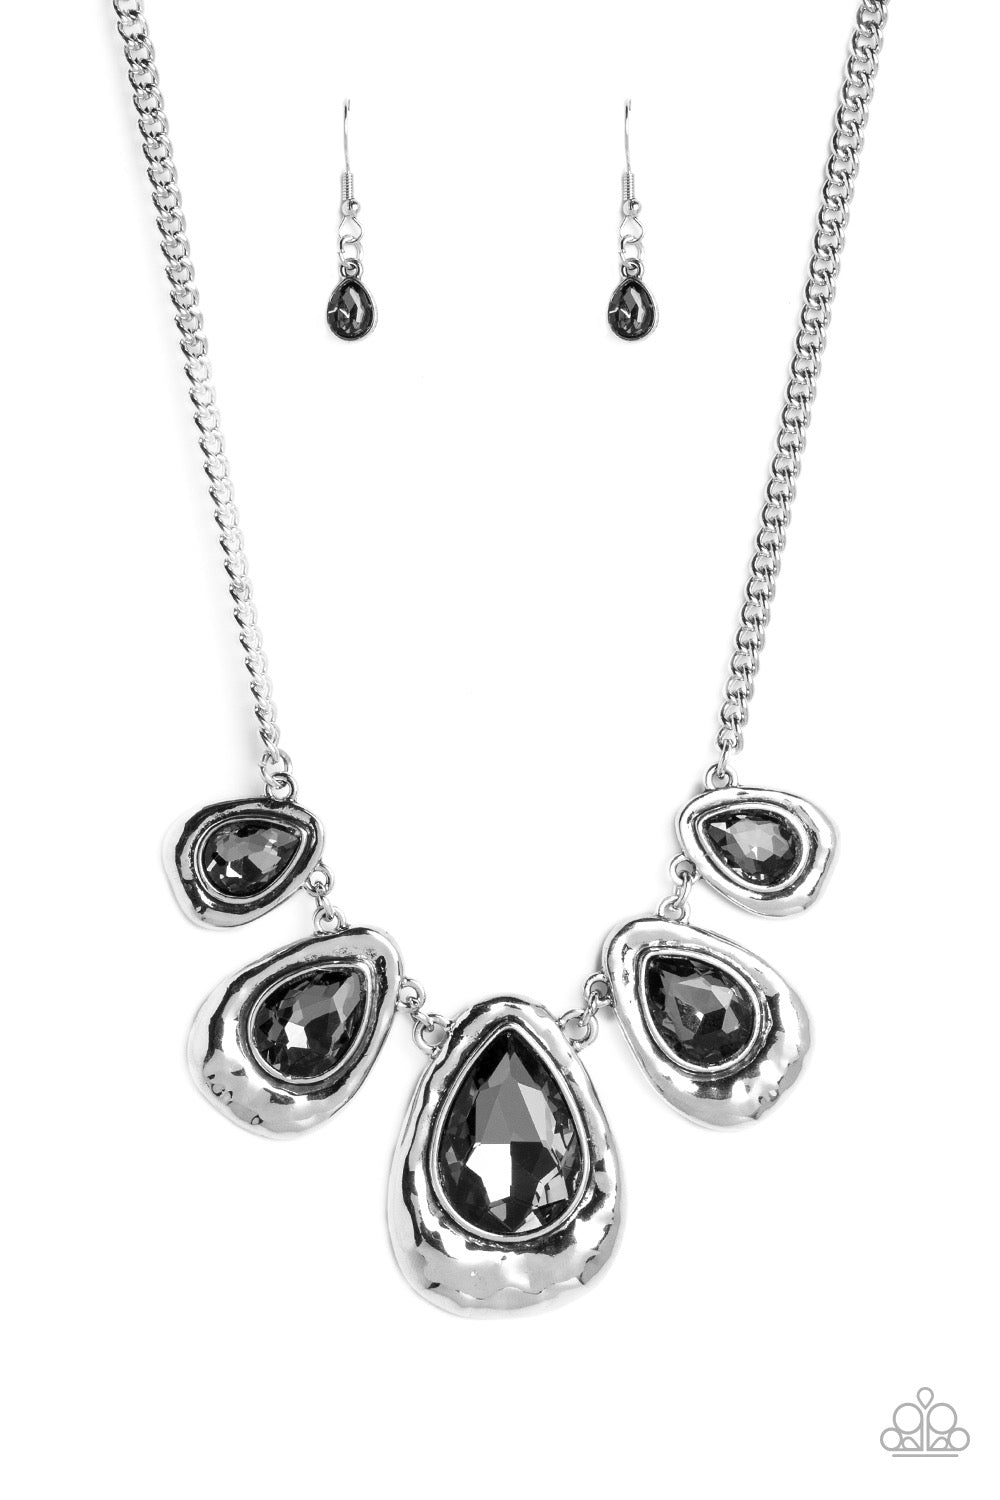 Crystal Rhinestones Necklace & Earrings Set - Wedding - Black TIe - Formal  on eBid United States | 185701068